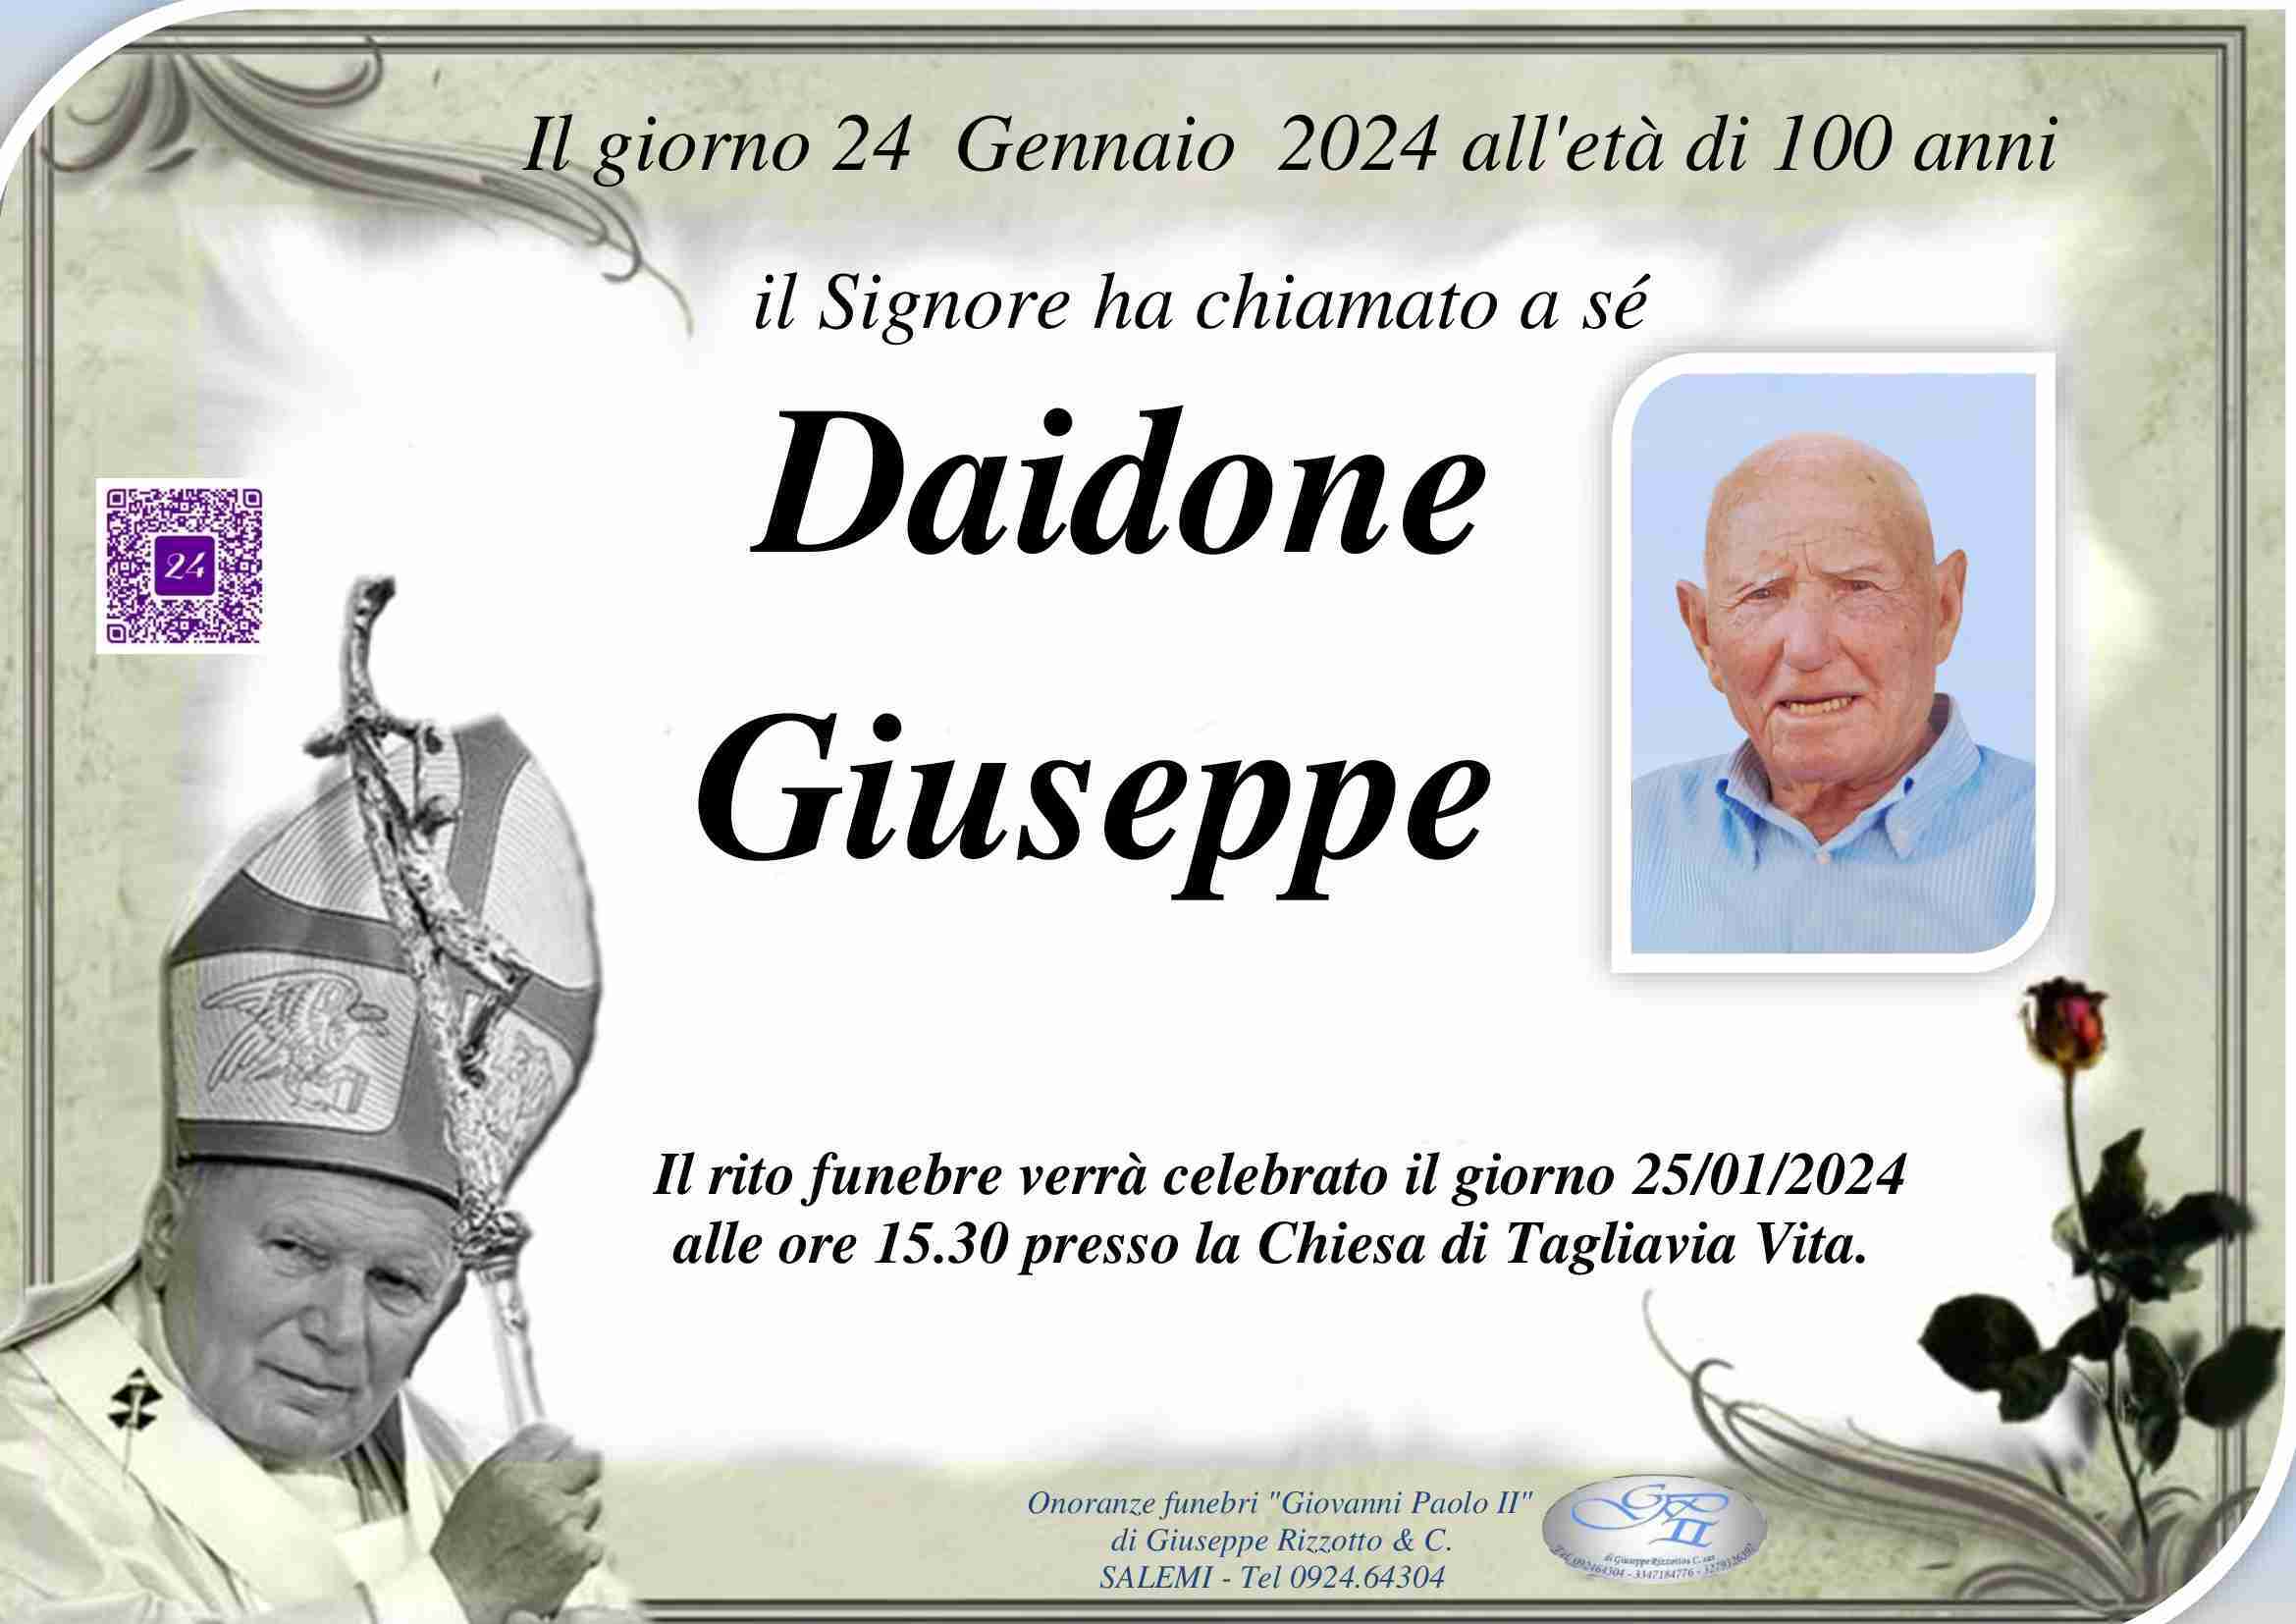 Giuseppe Daidone